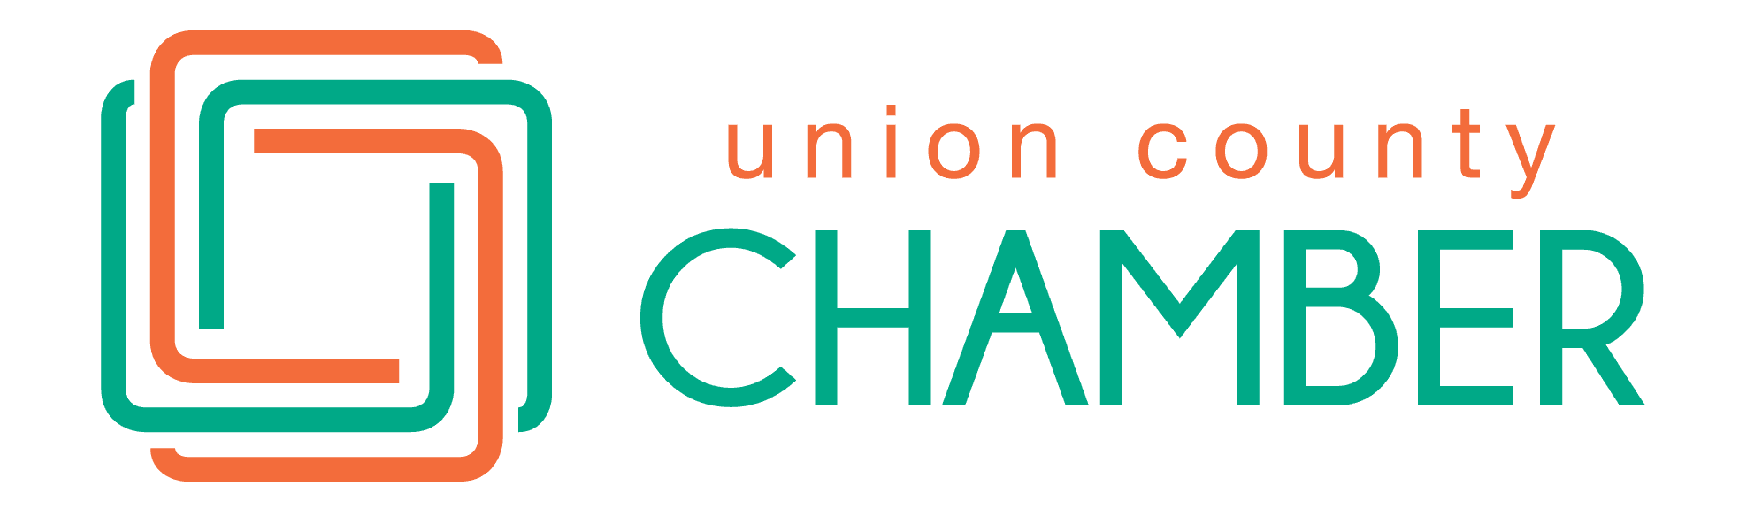 Union County Chamber